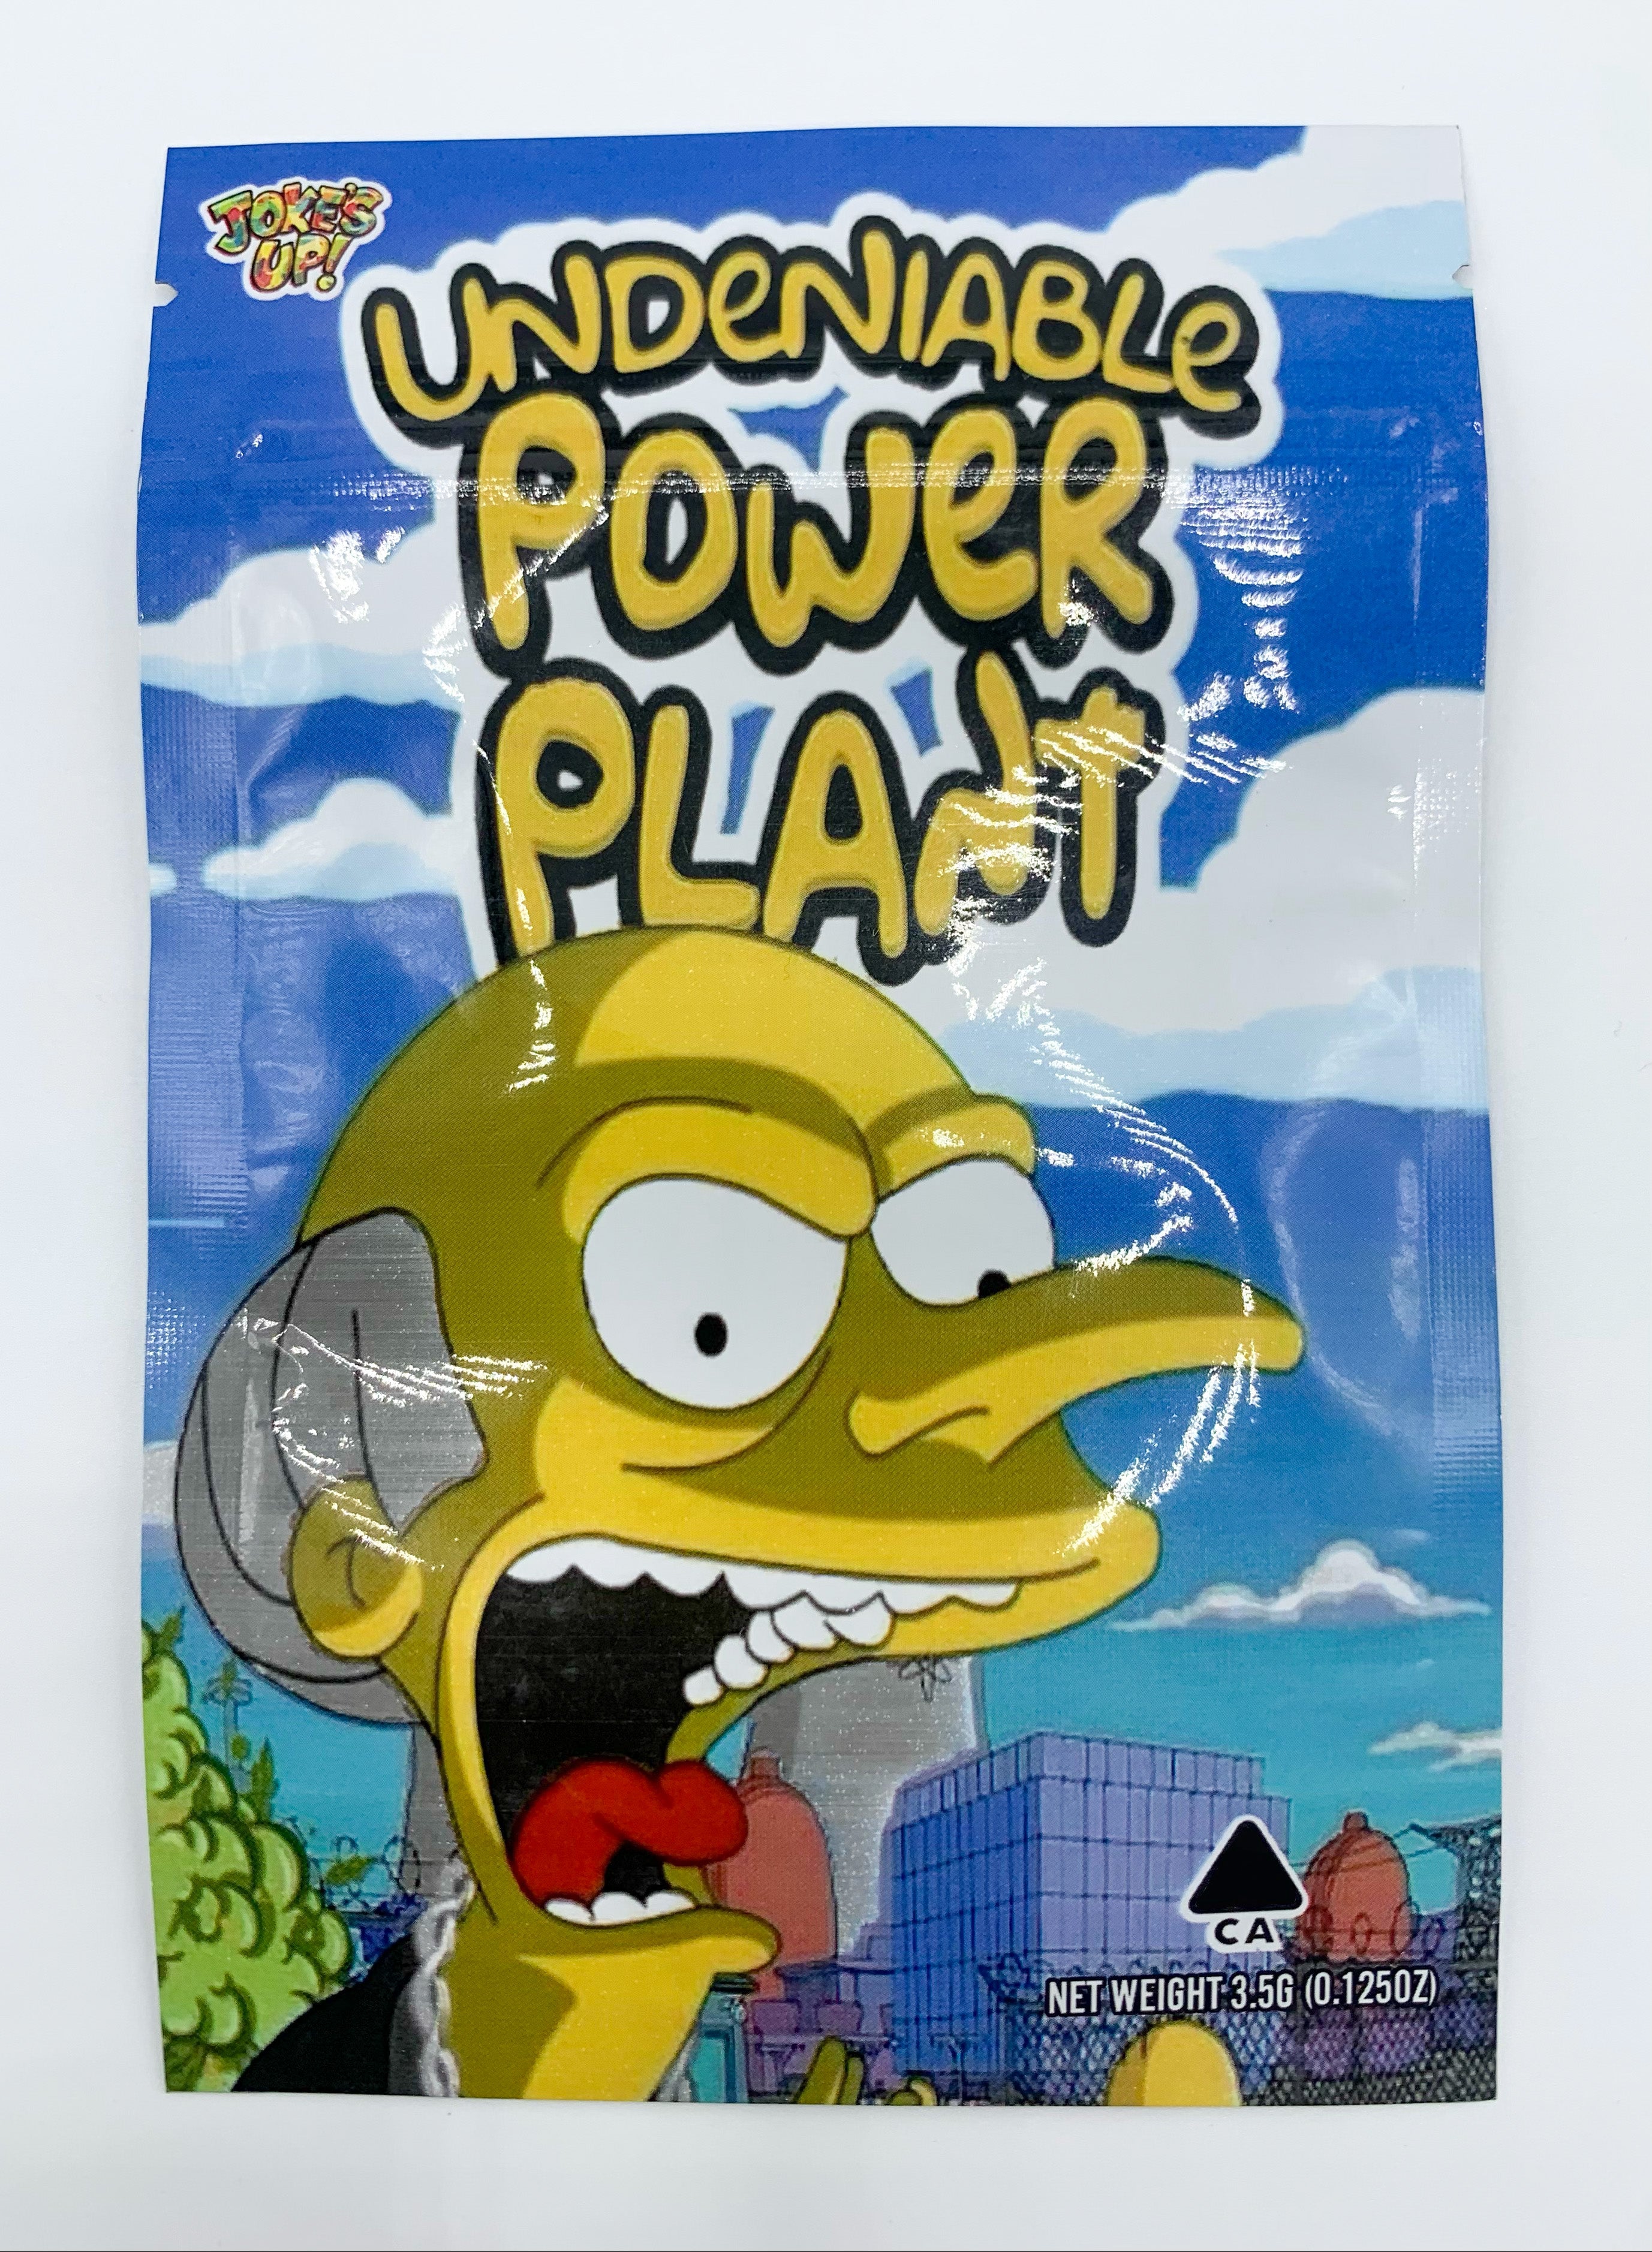 Jokes up undeniable power plant 3.5g Mylar bags